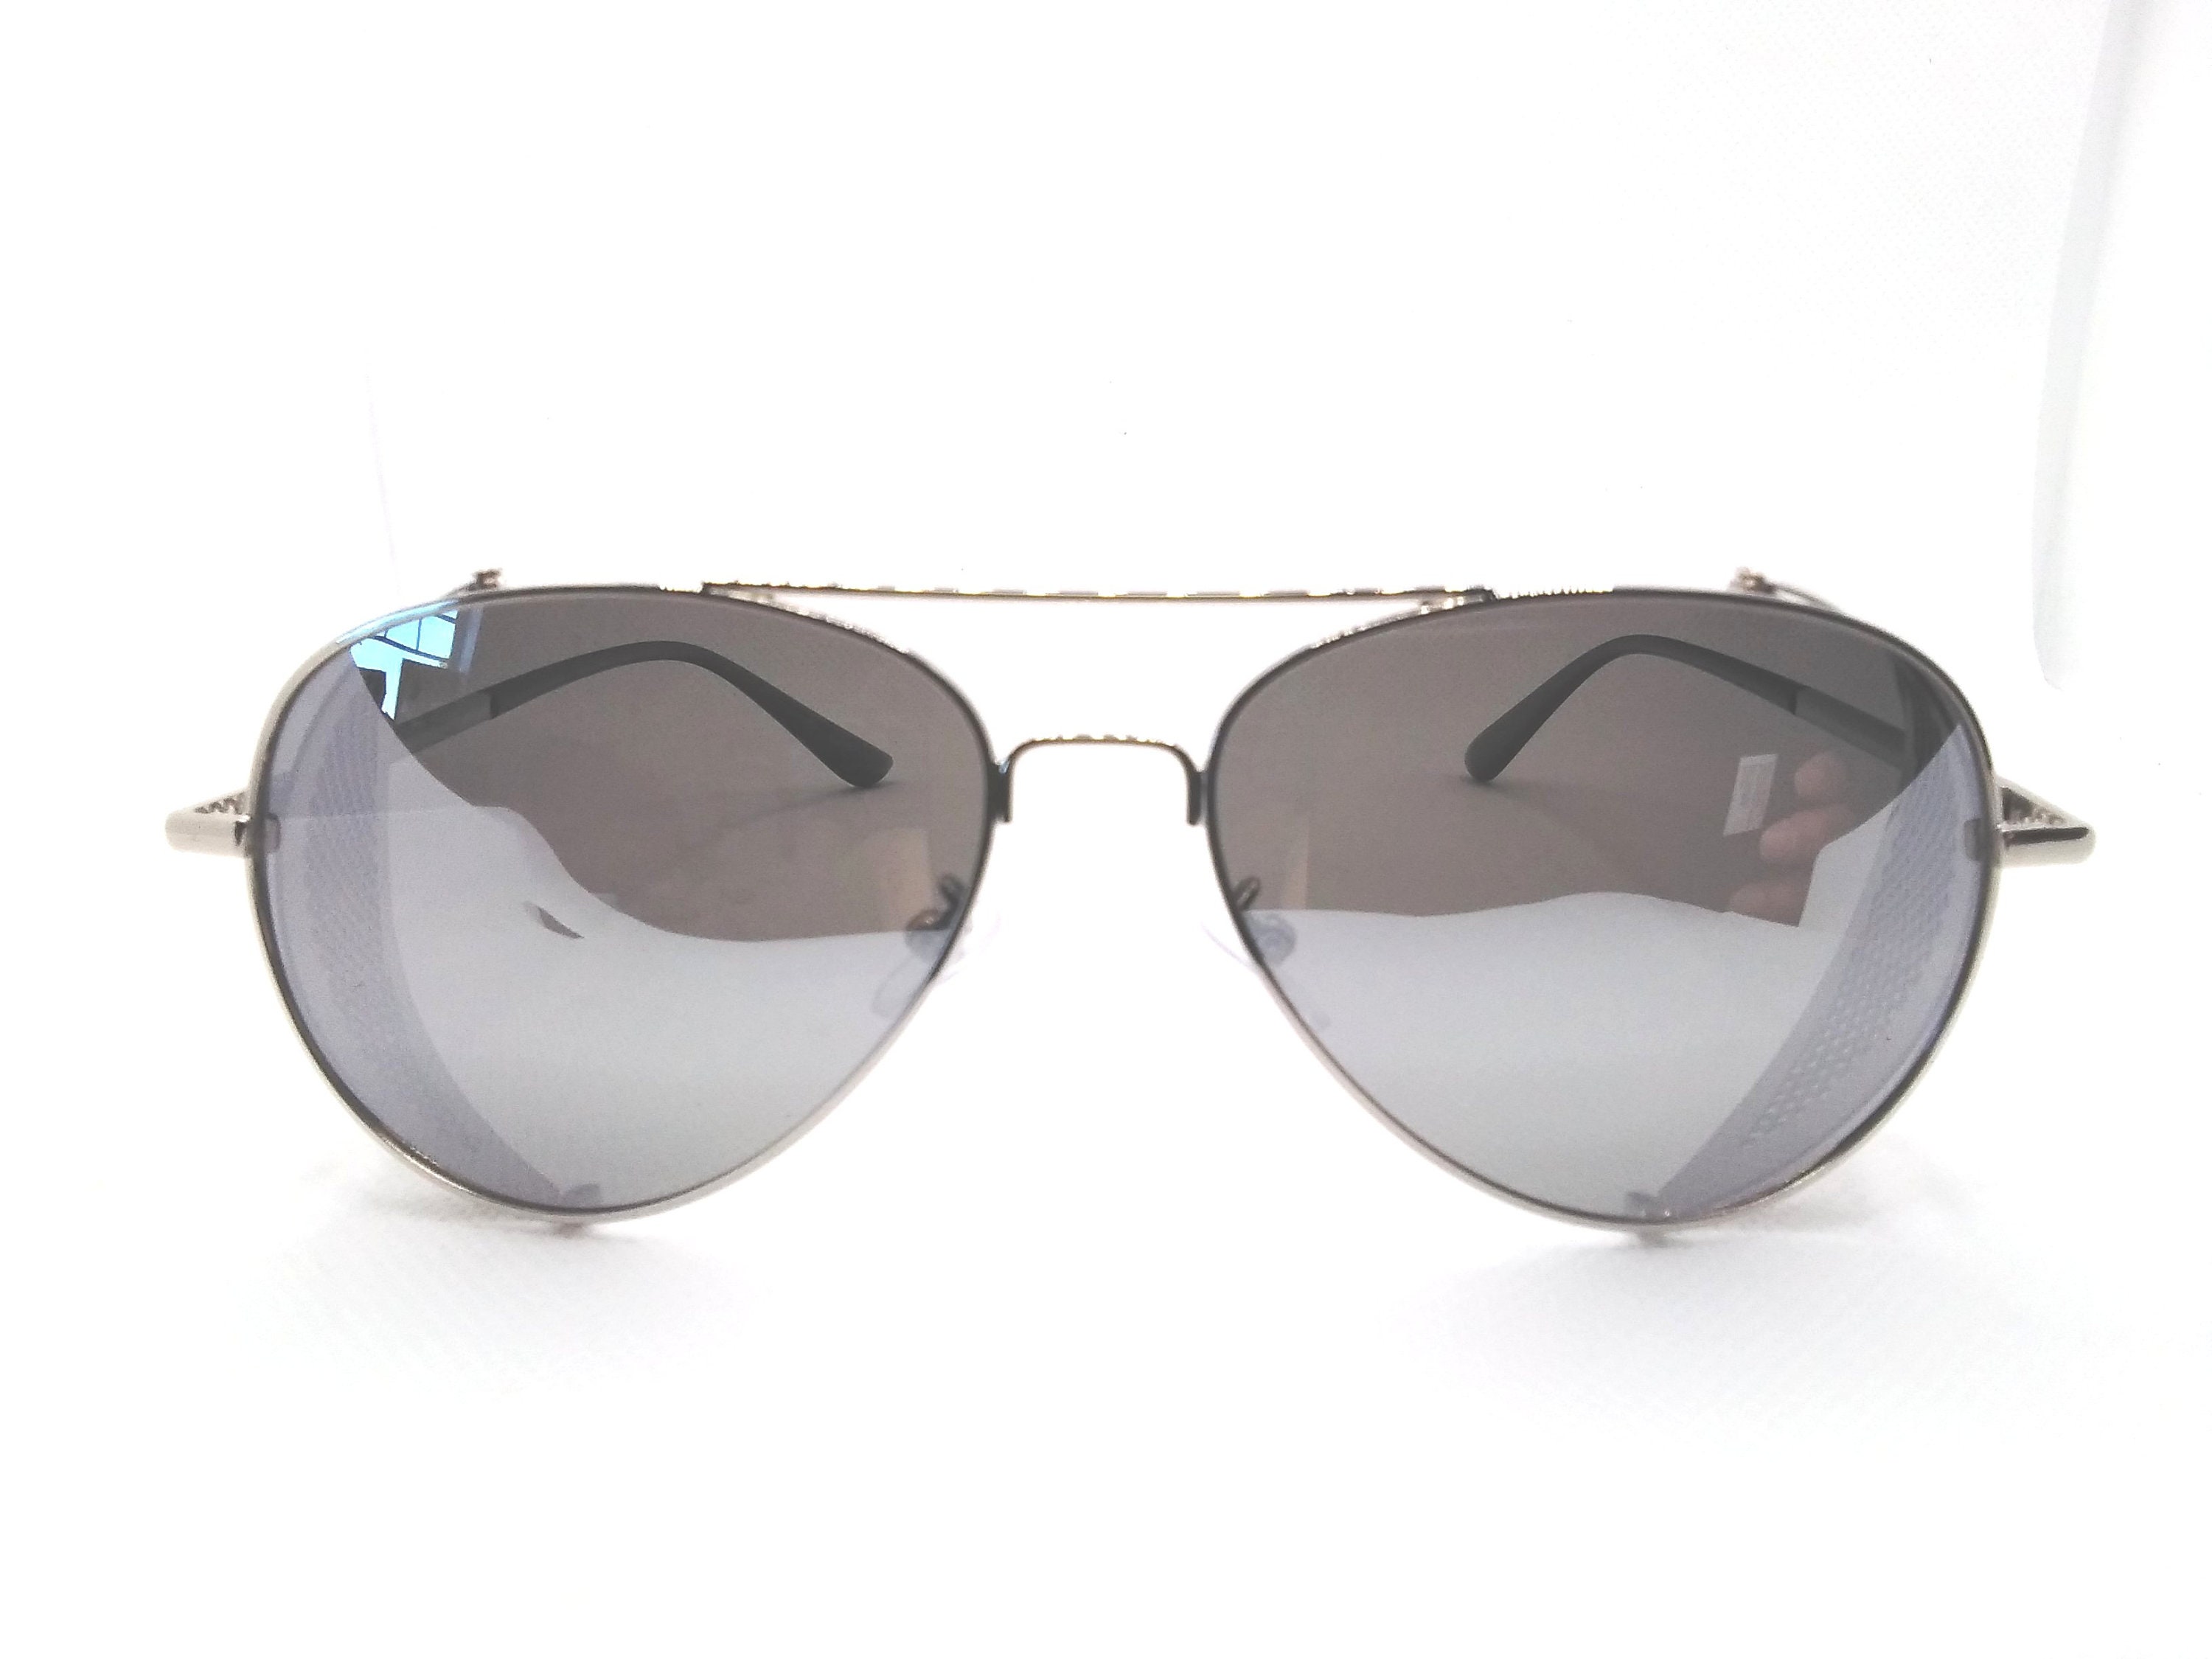 Aviator steampunk sunglasses unisex prescription glasses gift for her for him